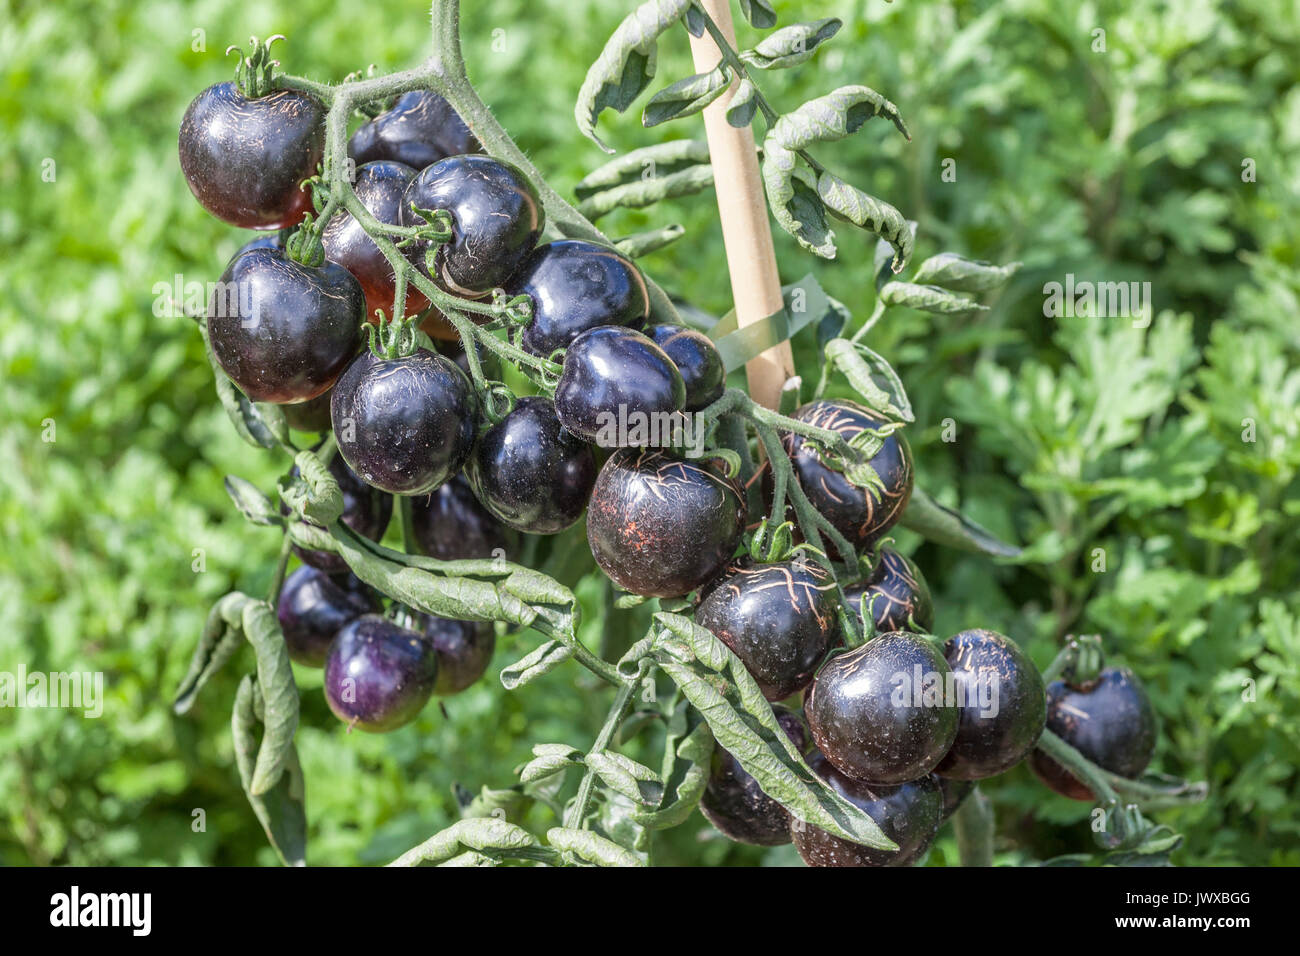 Black tomatoes Lycopersicon esculentum.  Indigo Rose growing on the vine Stock Photo